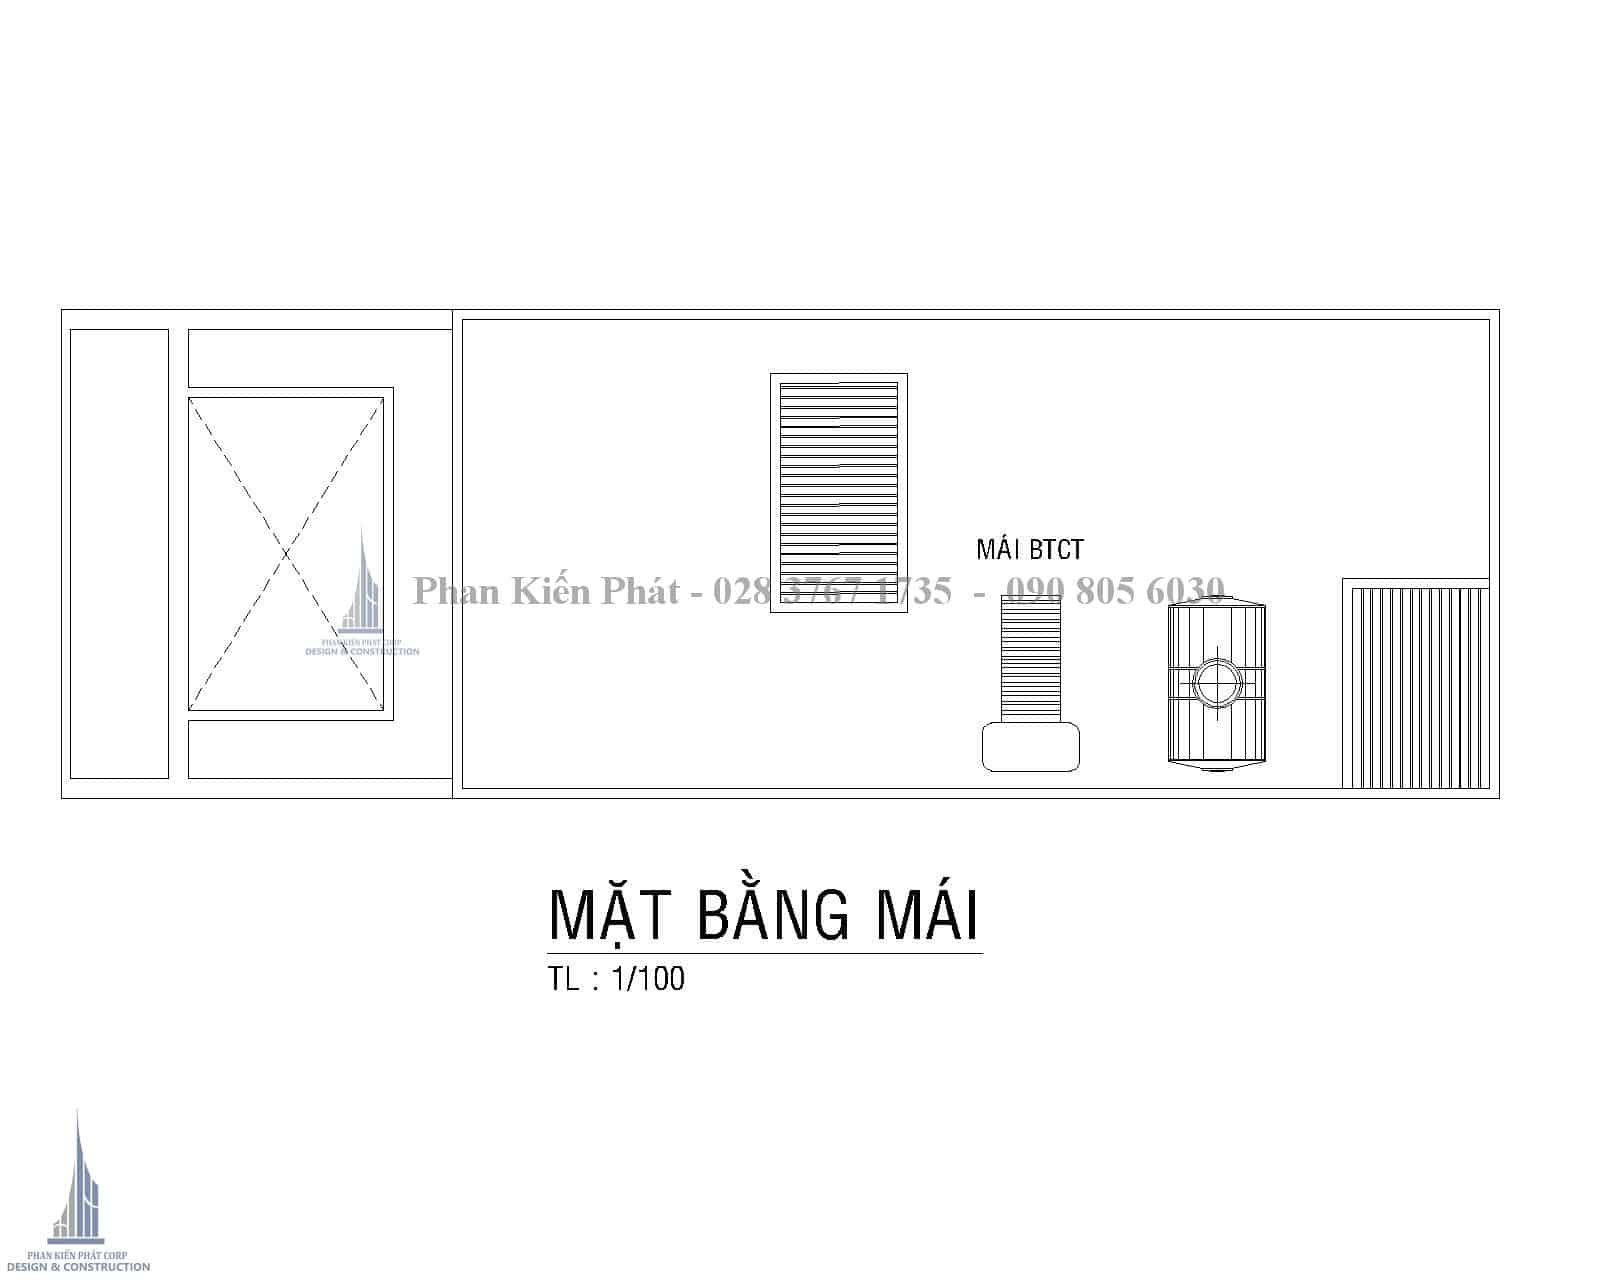 Mat Bang Cong Nang Mai Nha Ong Co Dien Dep Anh Hoa